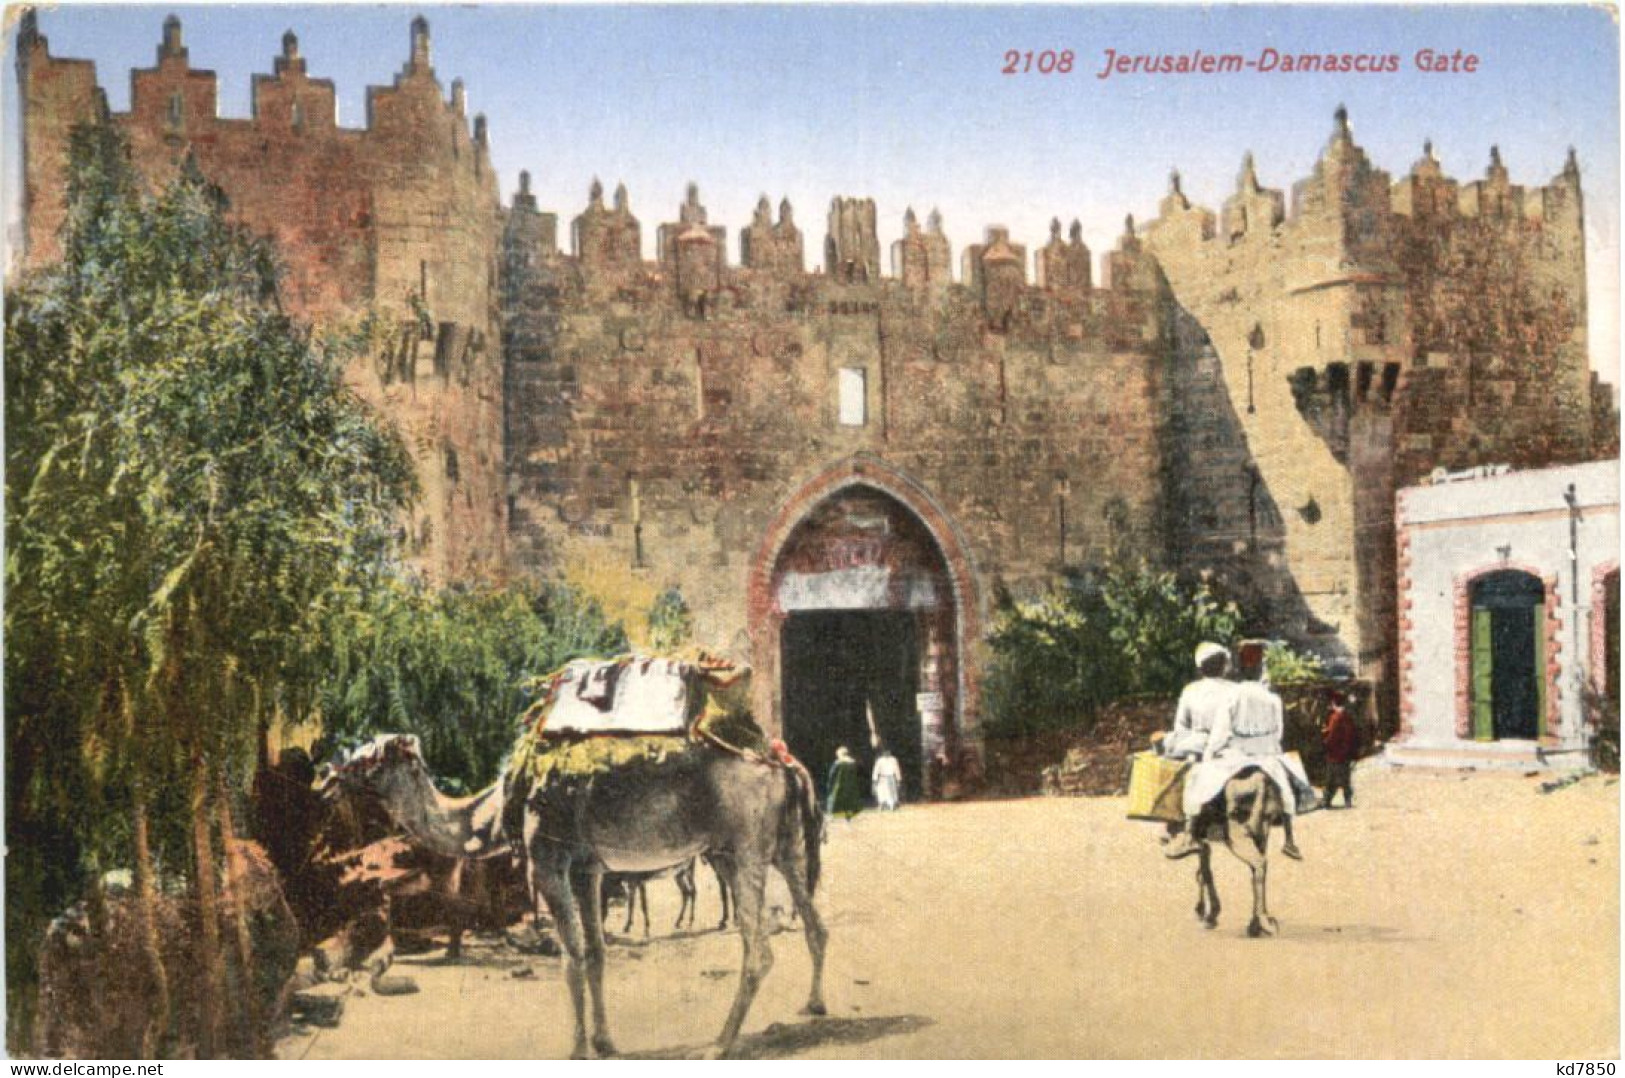 Jerusalem - Damascus Gate - Palestine